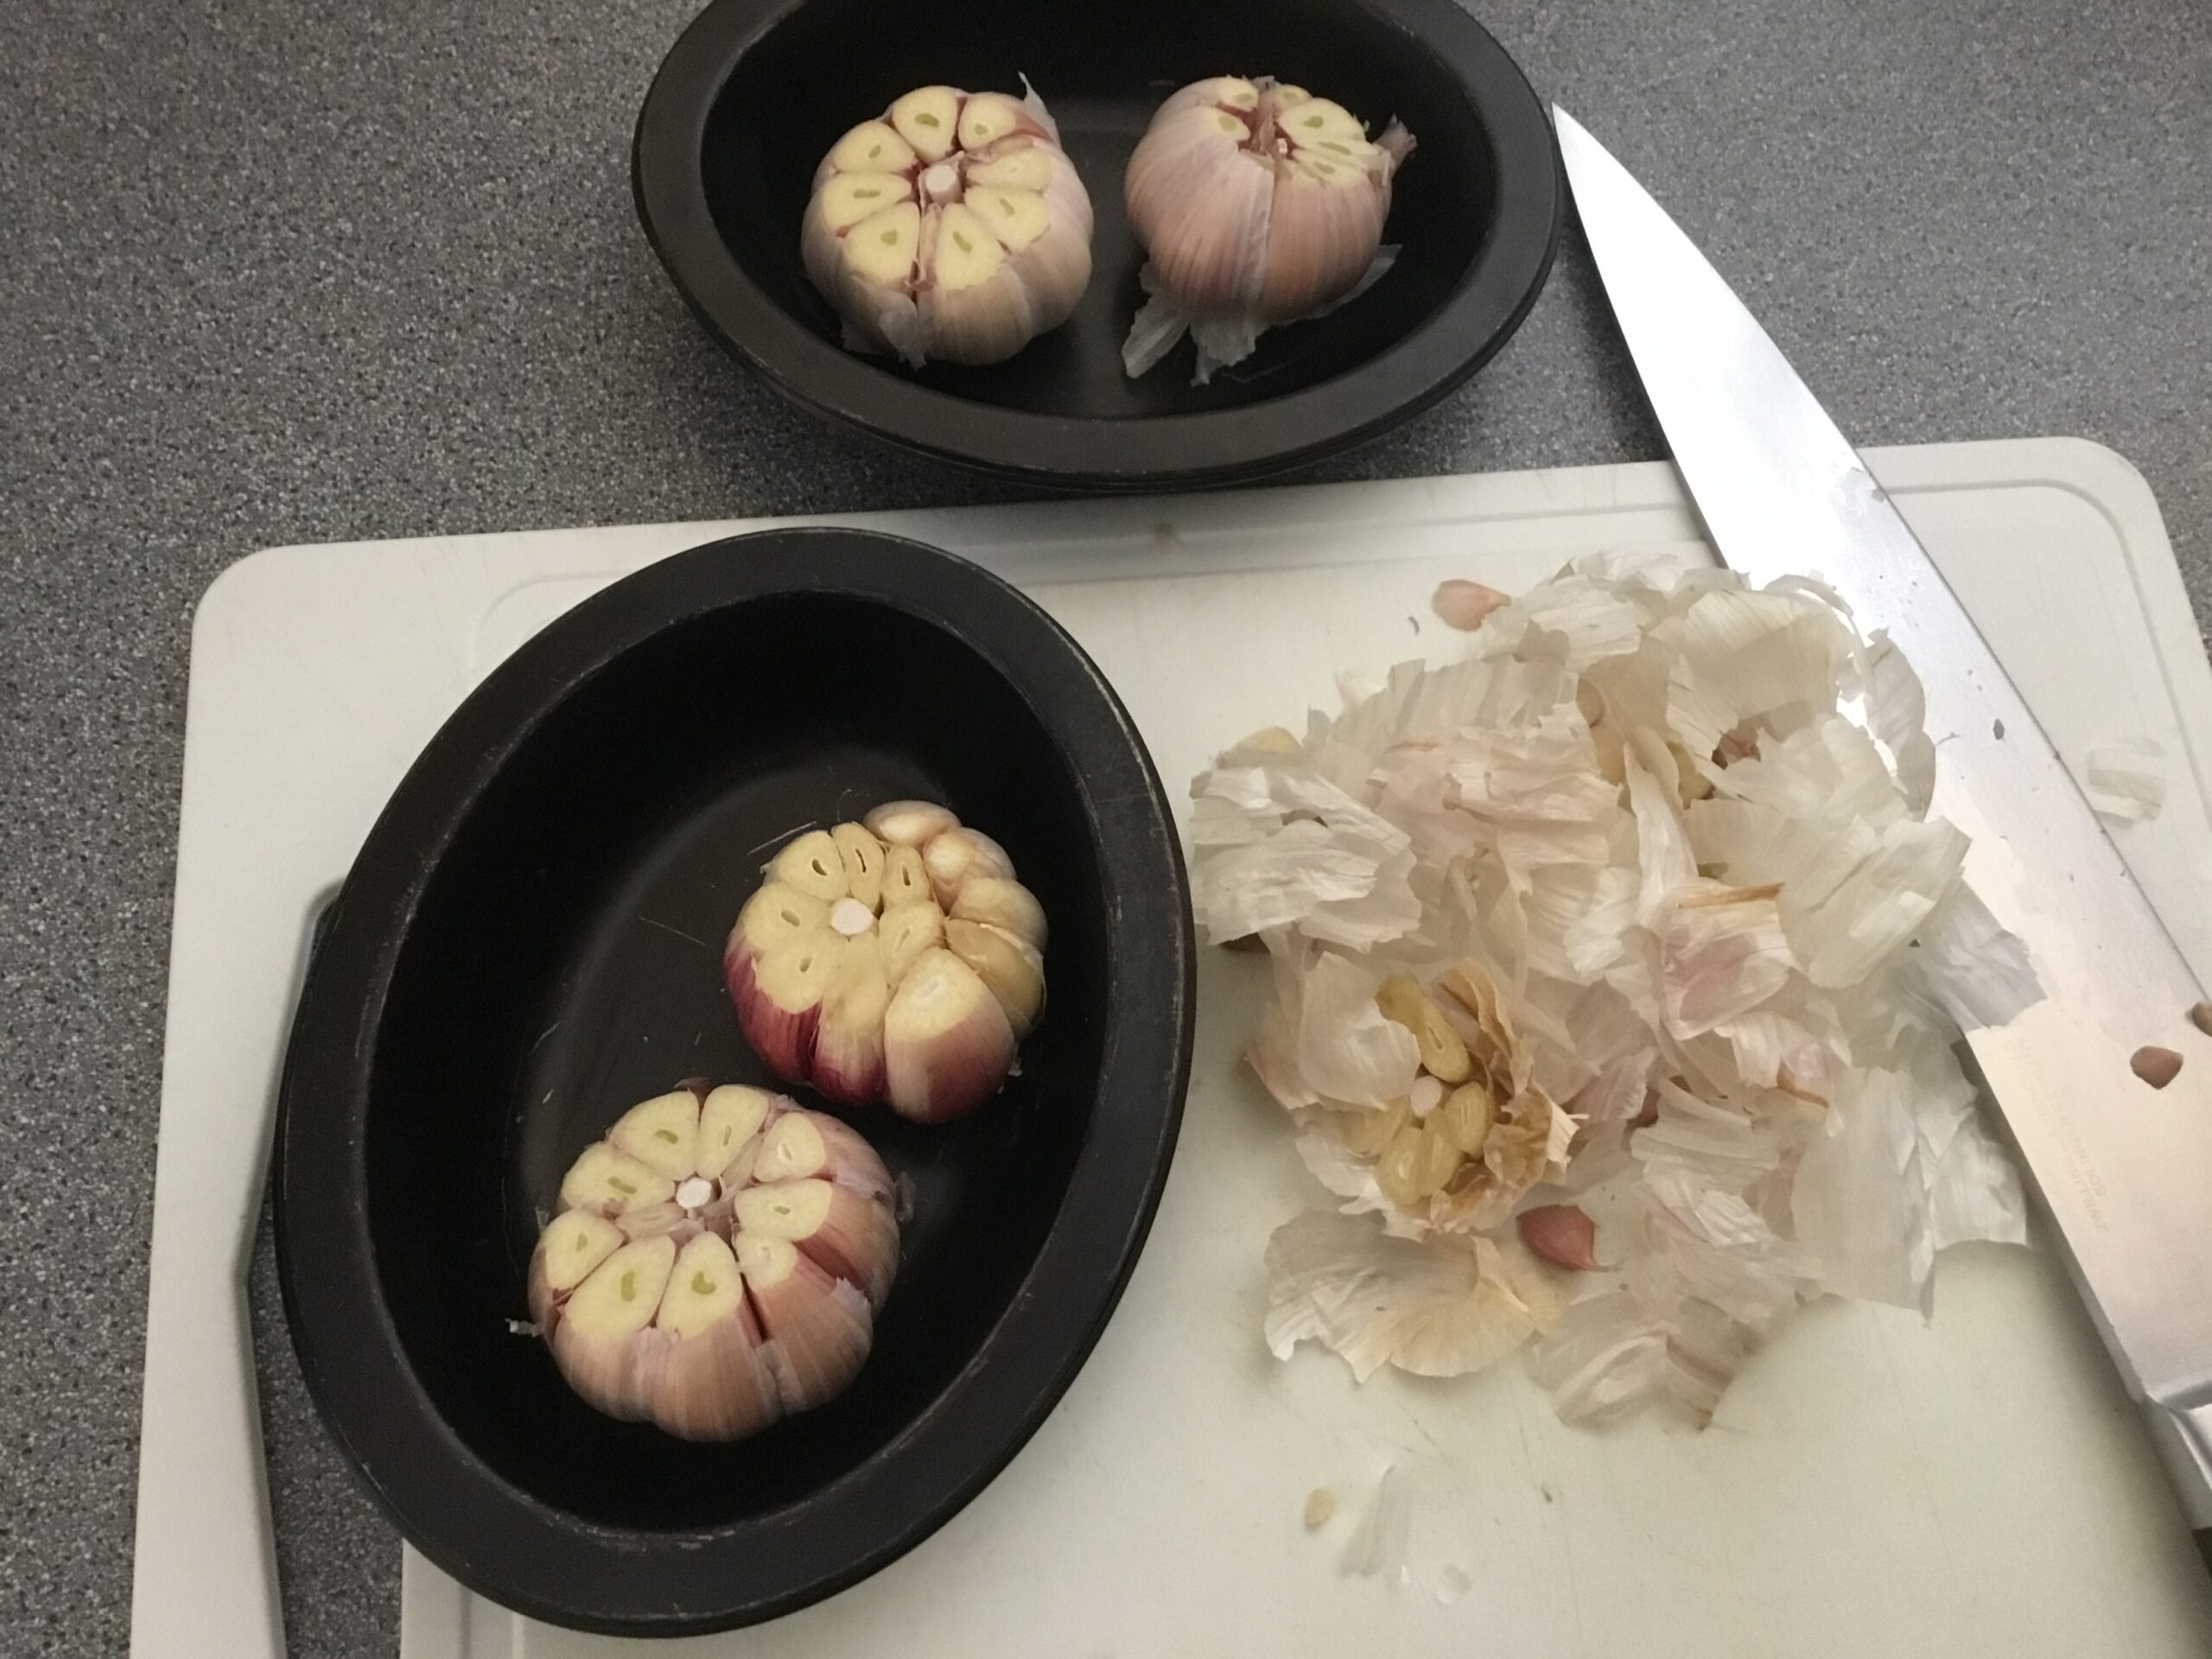 Garlic cloves for roasting